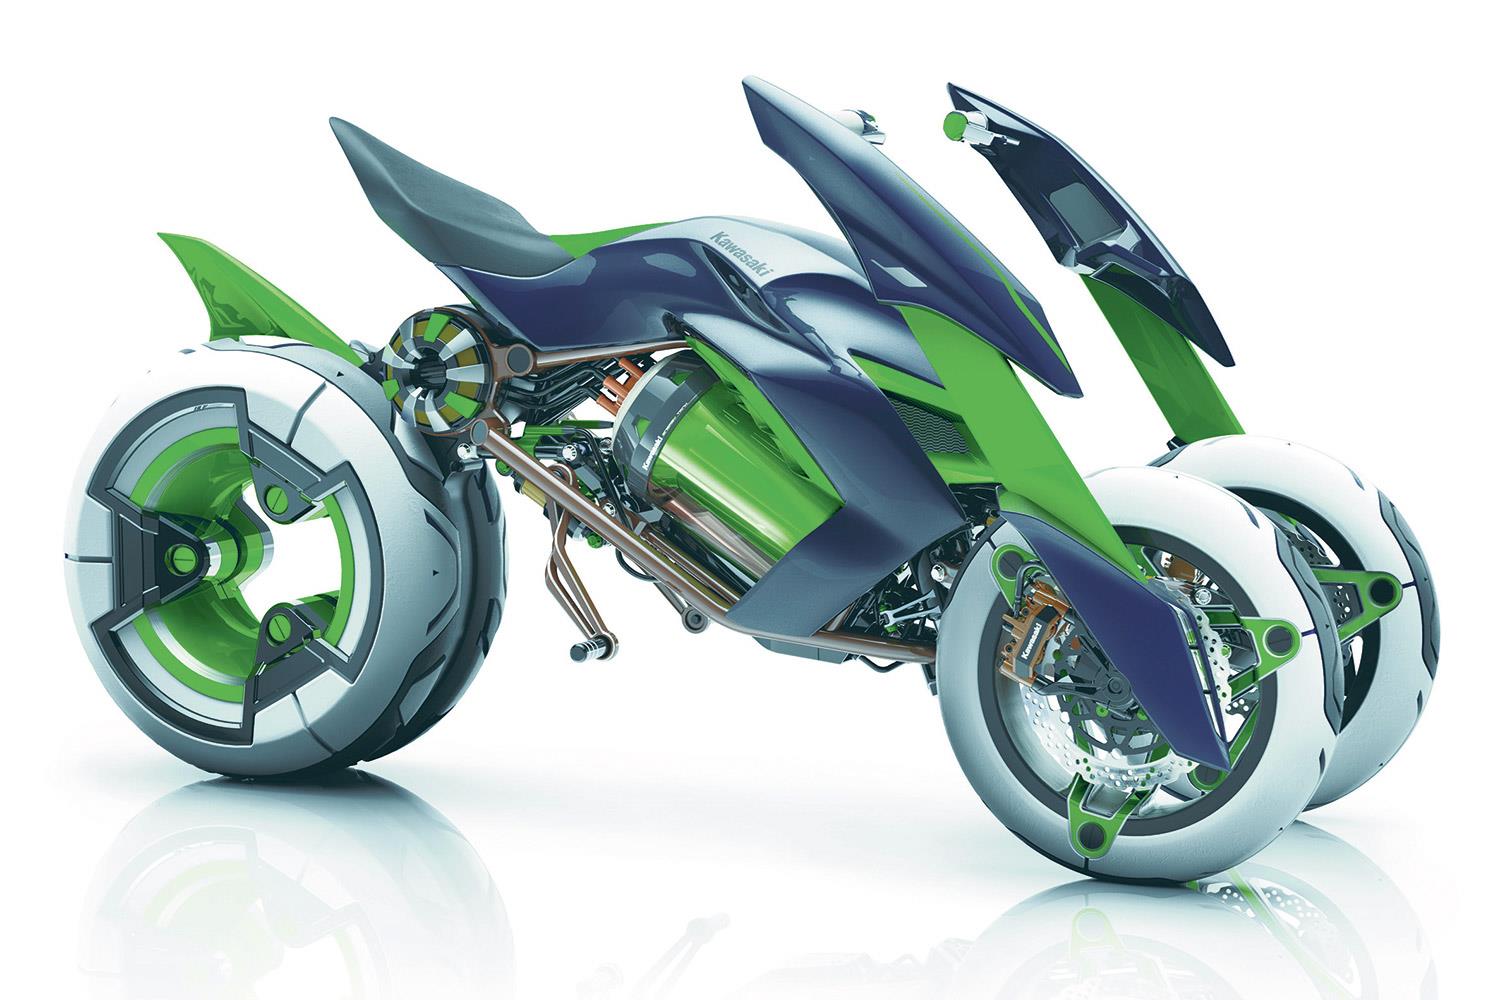 Kawasaki ramp up technology three-wheeled MCN